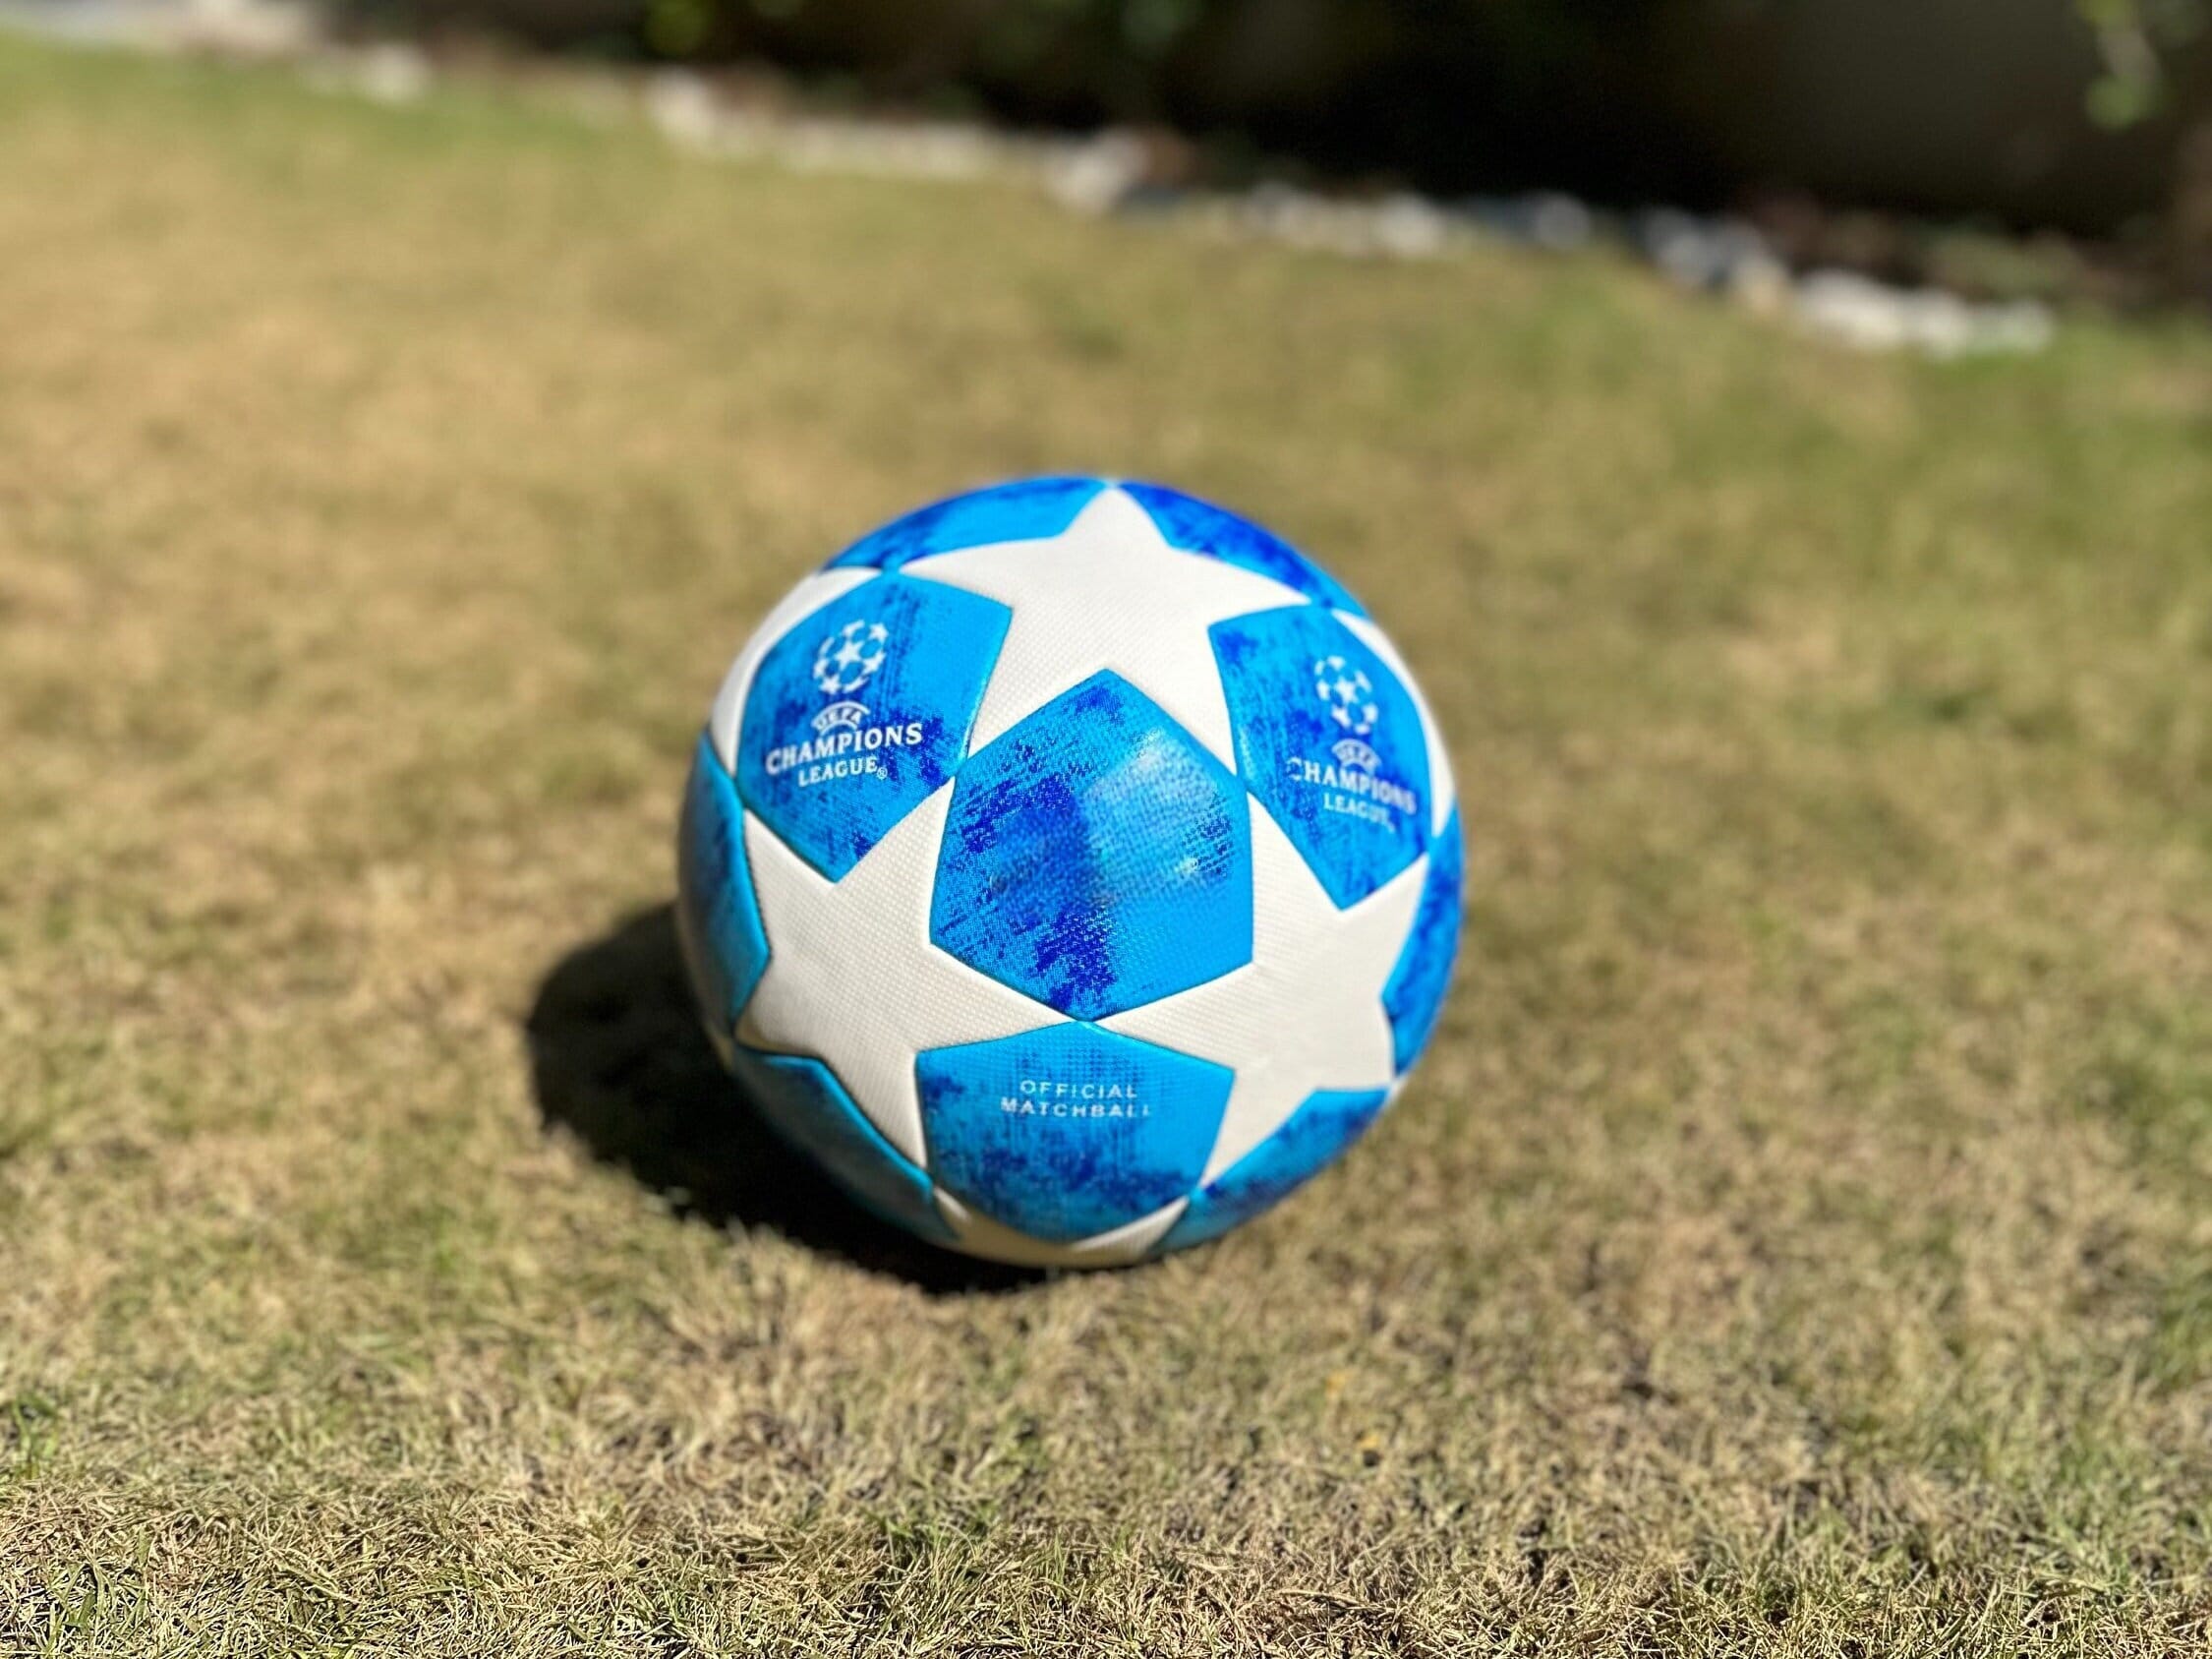 ADIDAS Brazuca Fifa Worldcup 2014 Brazil MATCH Soccer Ball Size 5 Replica